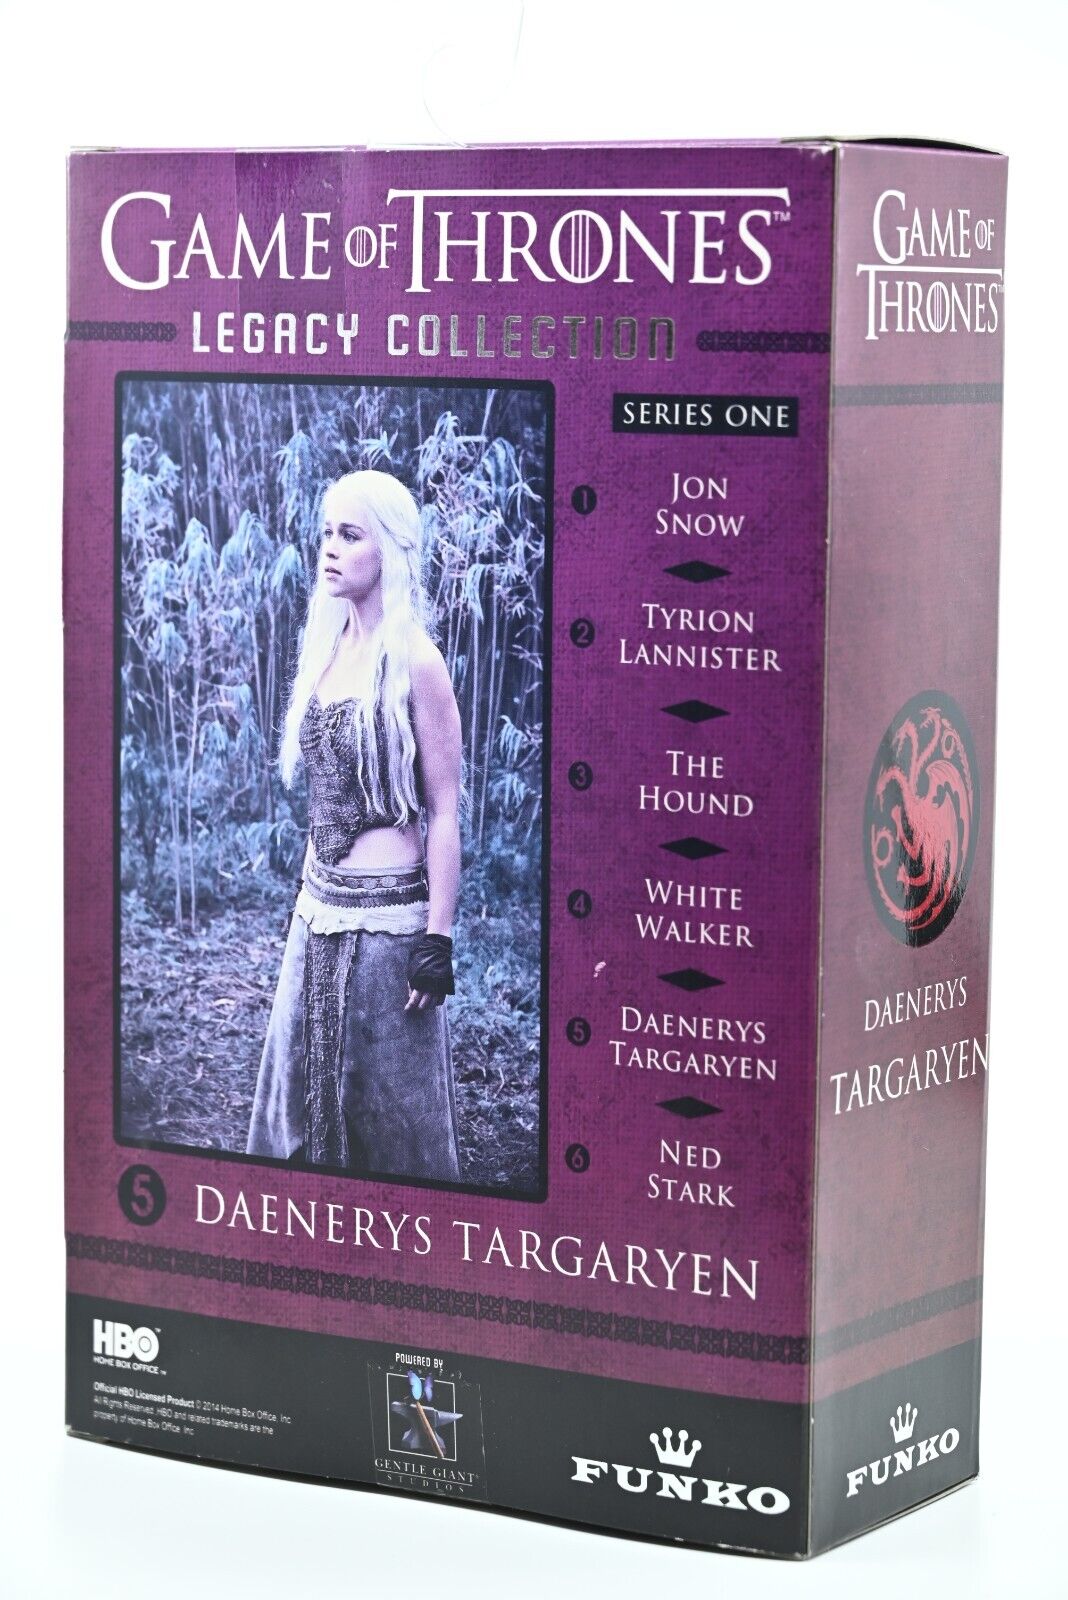 Game of Thrones - Daenerys Targaryen Figure - Toy - Model